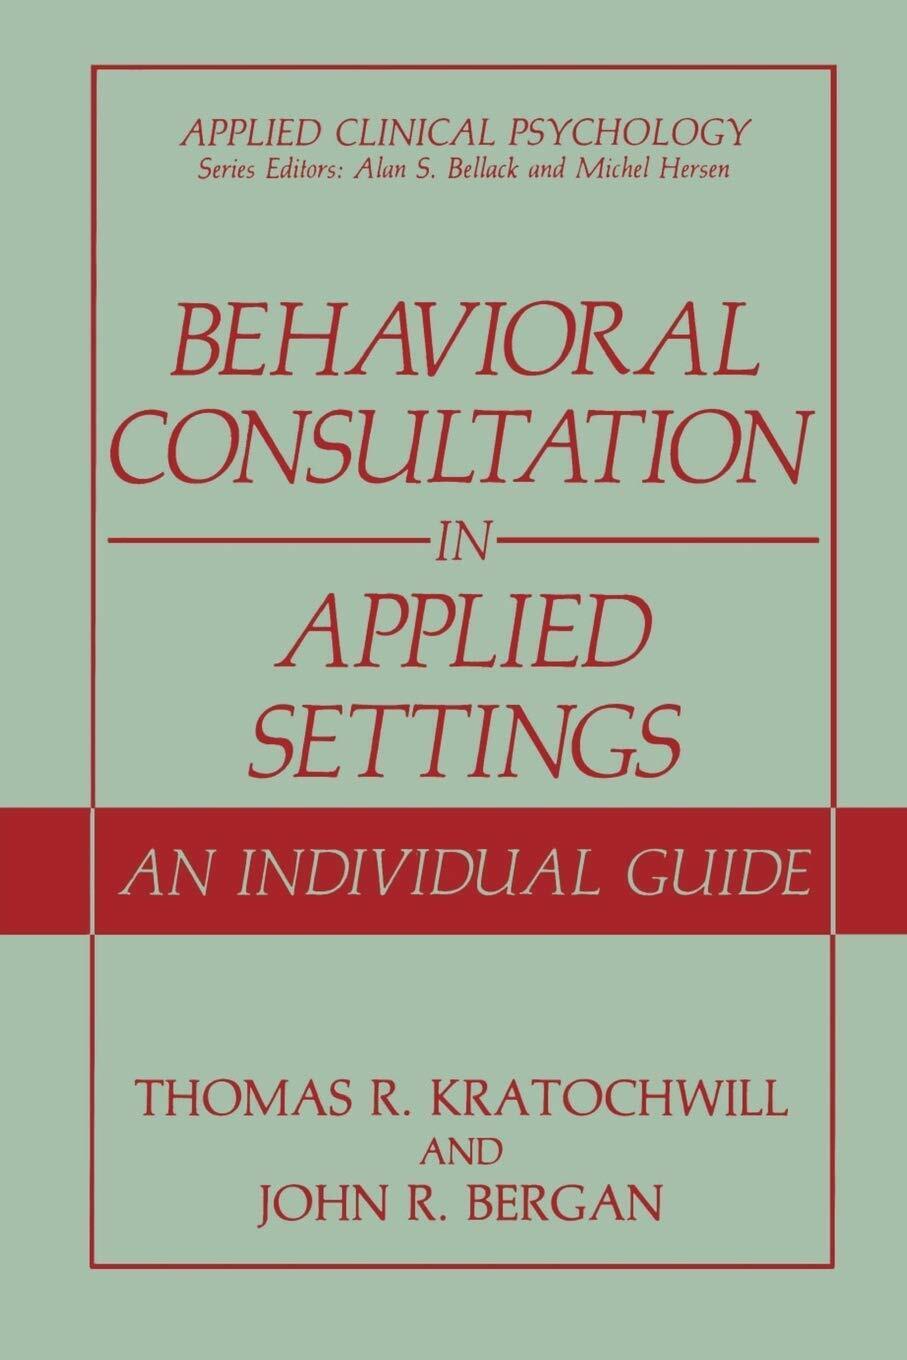 Behavioral Consultation in Applied Settings - John R. Bergan - Springer, 2008 libro usato